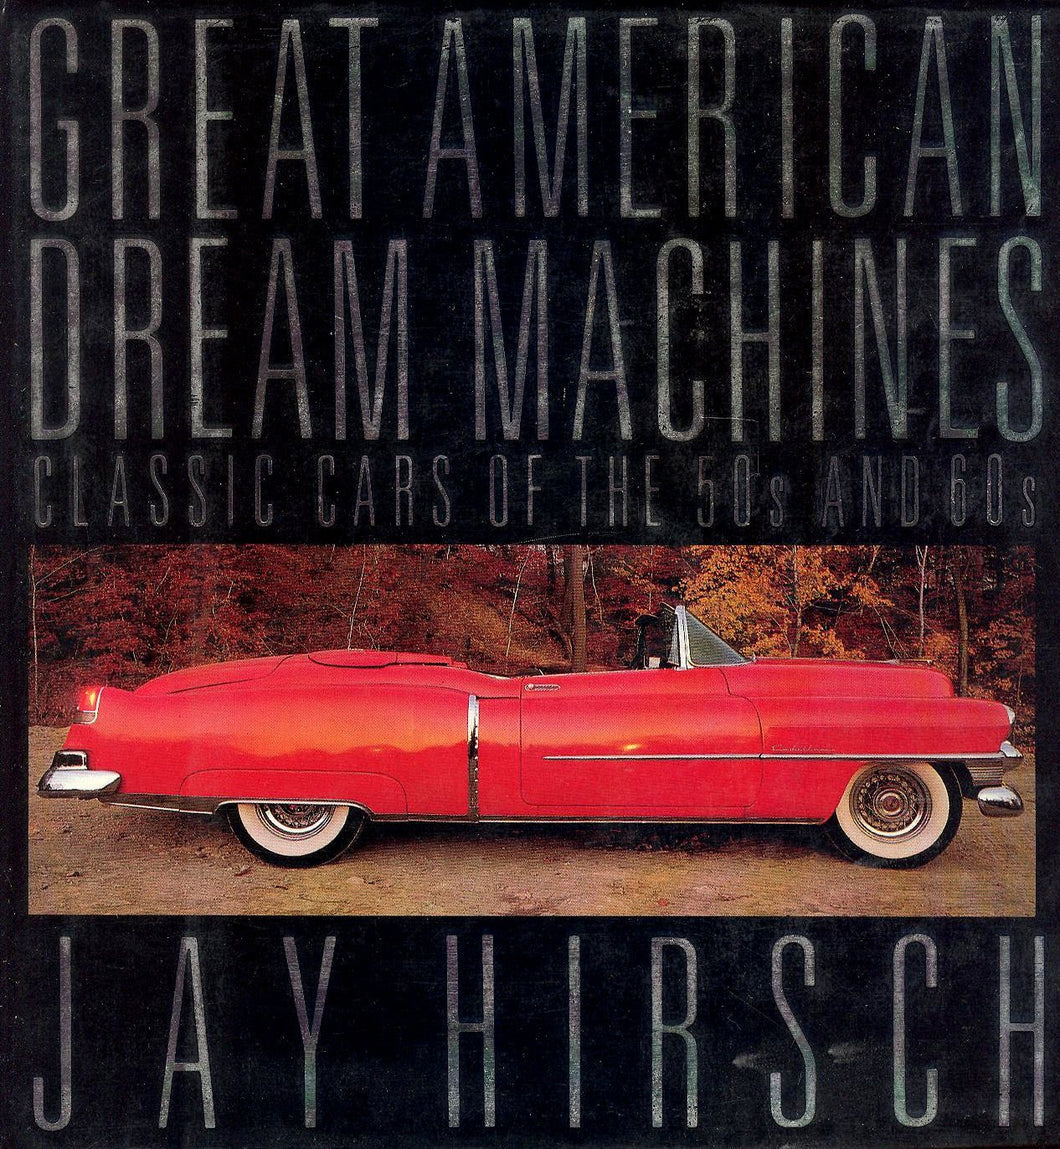 Great American Dream Machines Hirsch, Jay